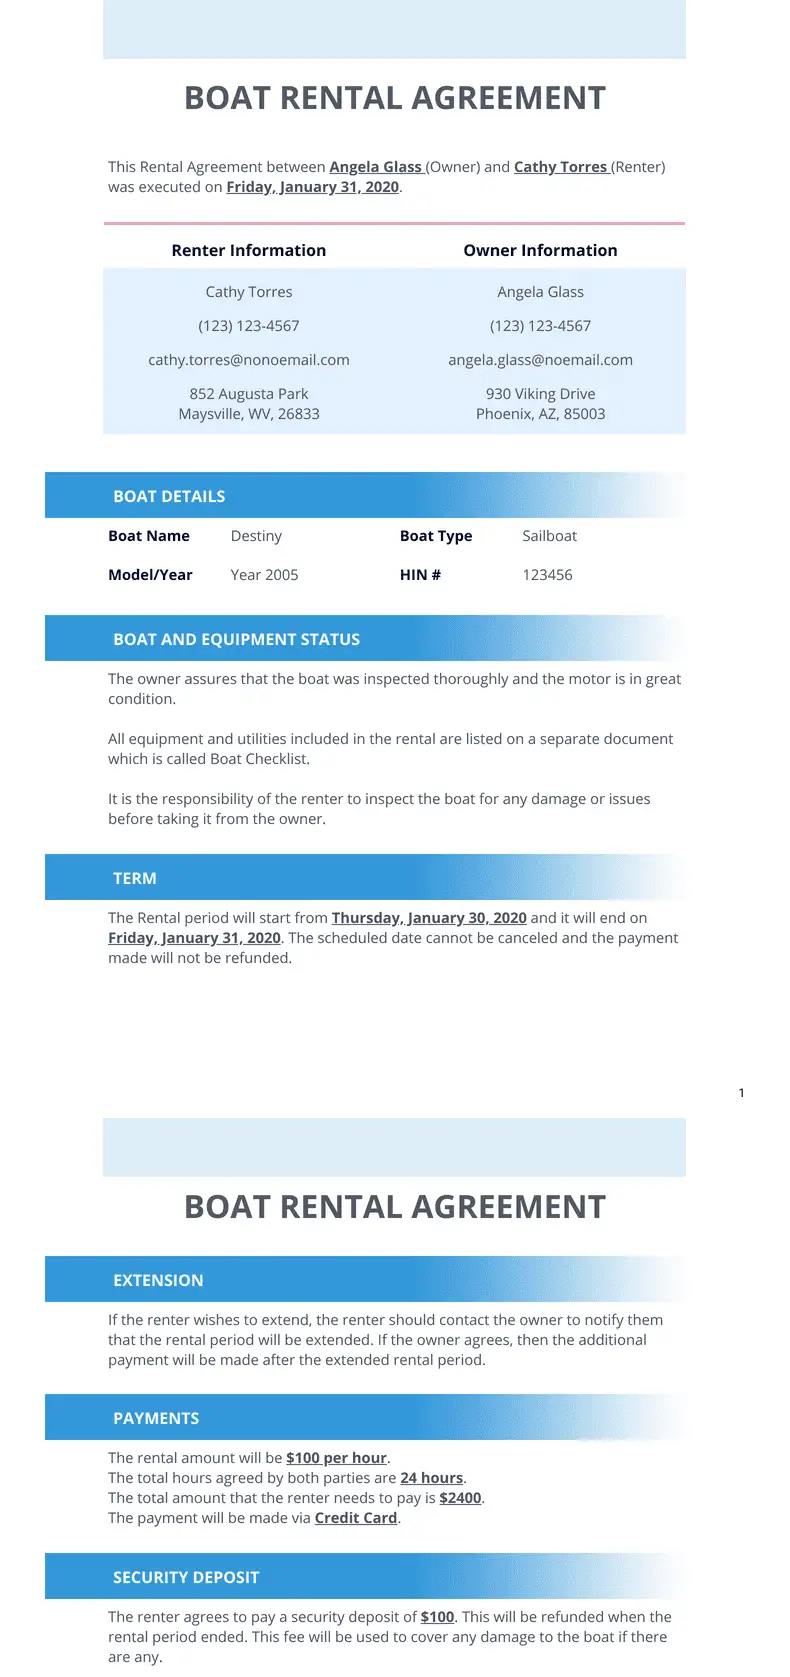 Boat Rental Agreement